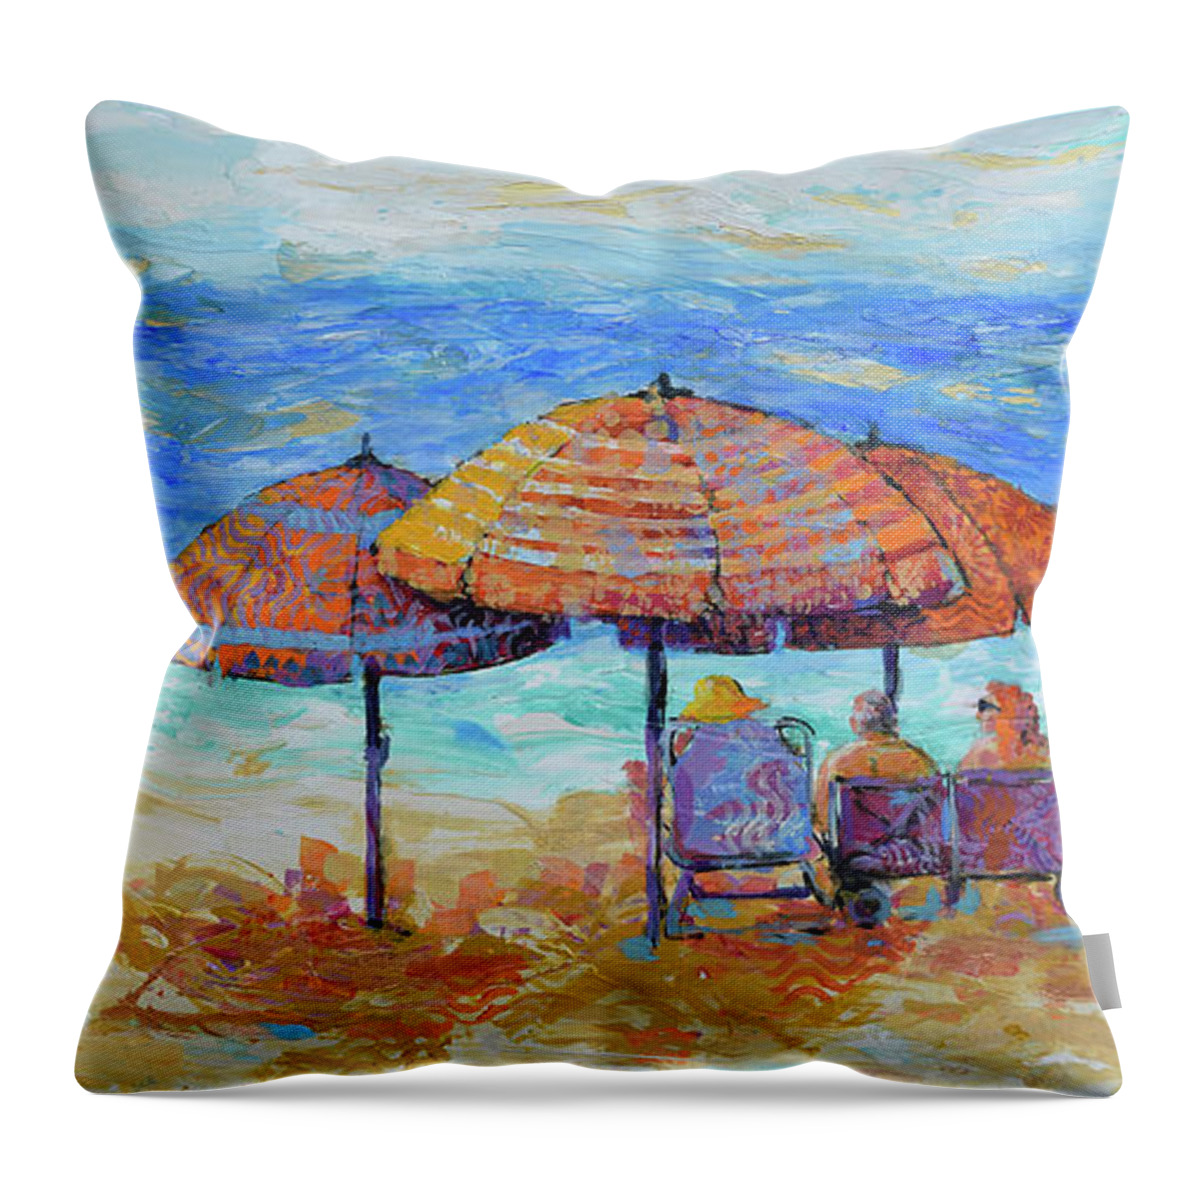  Throw Pillow featuring the painting Beach Umbrellas by Jyotika Shroff